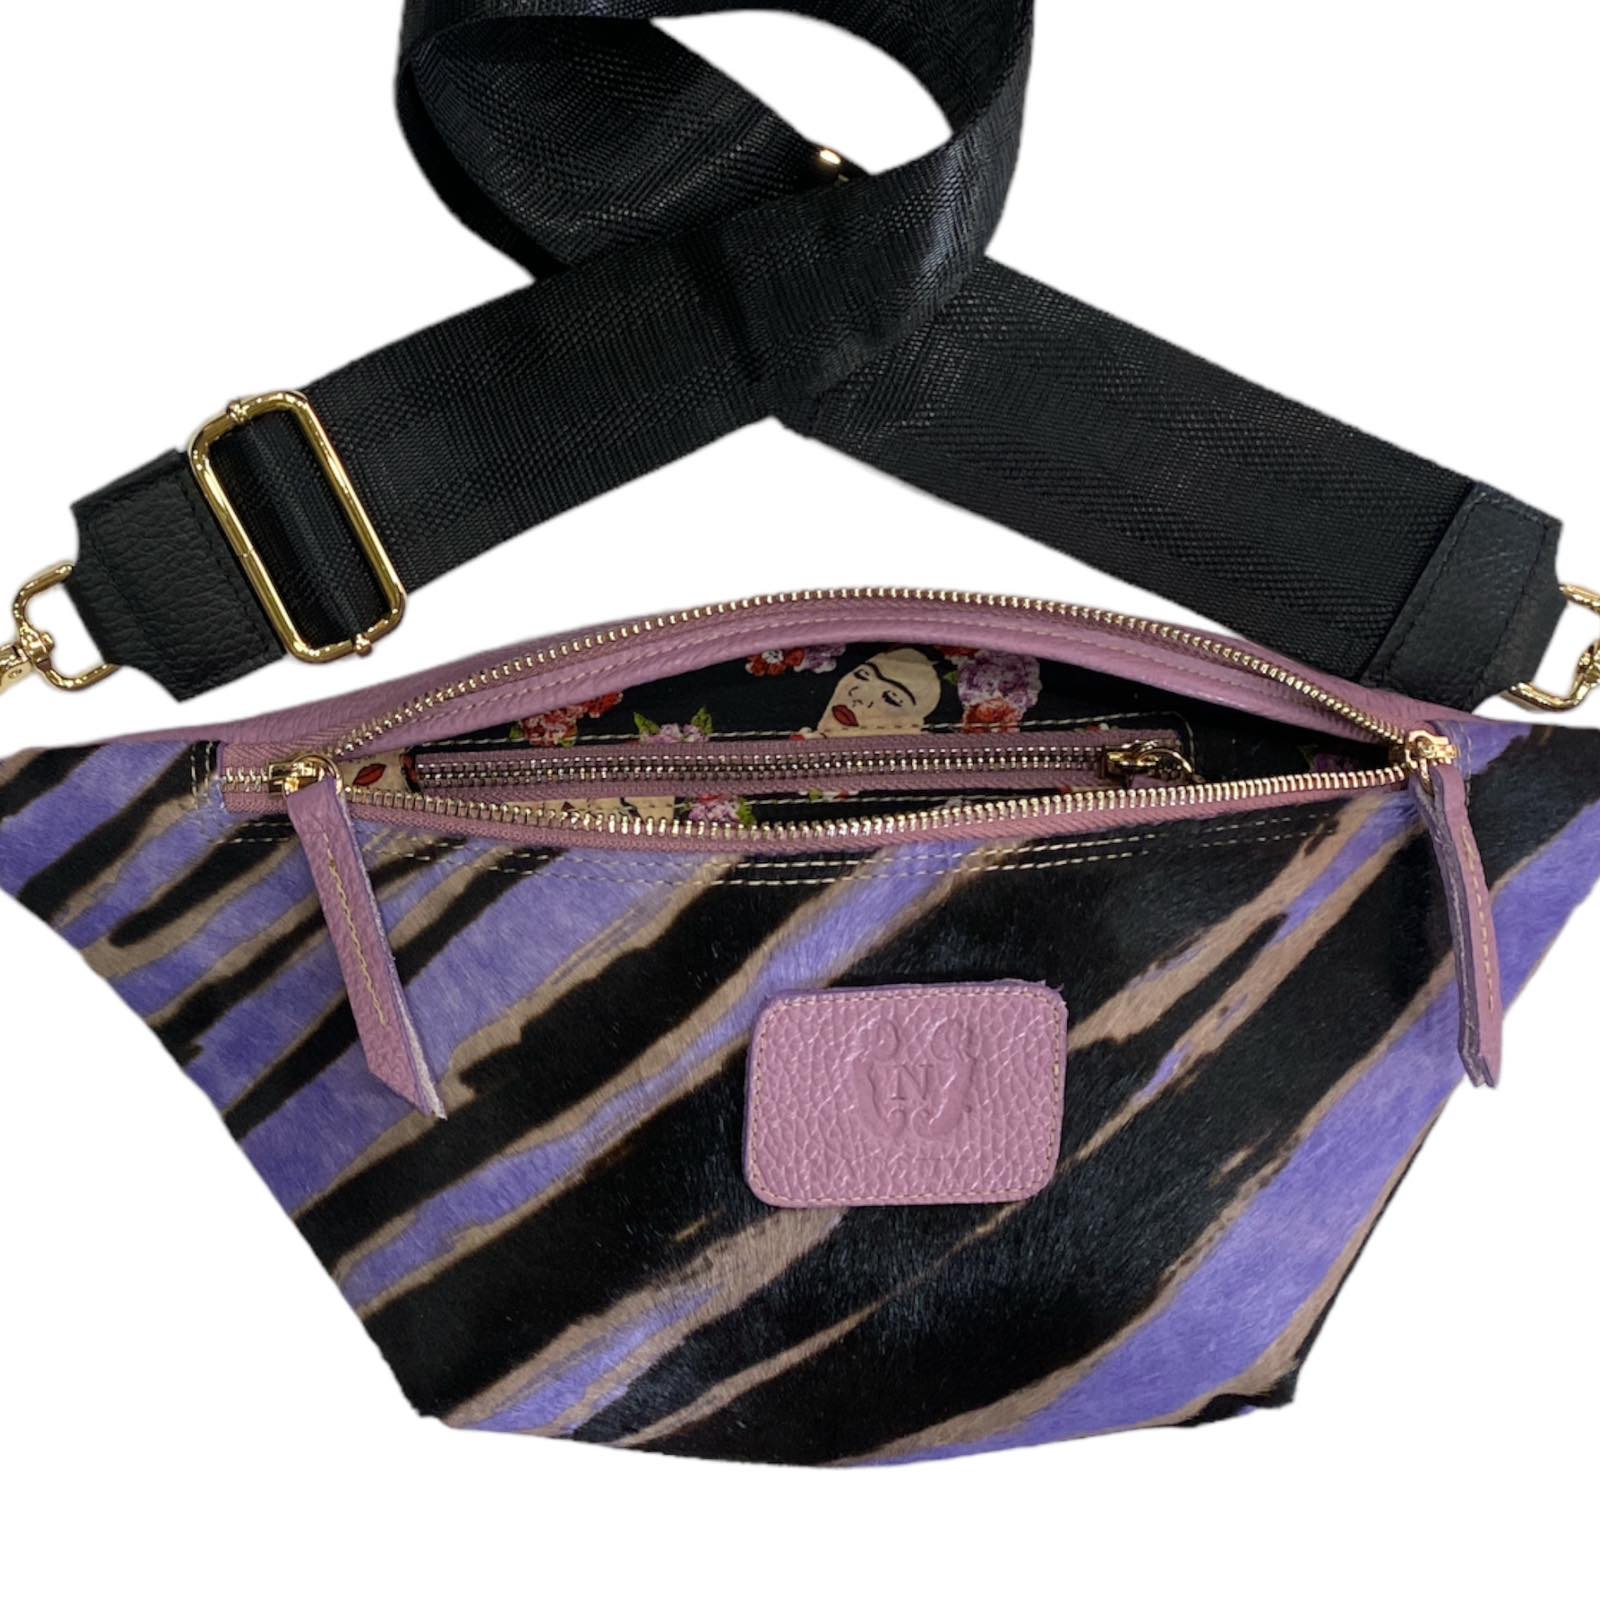 Black and purple calf-hair leather belt bag